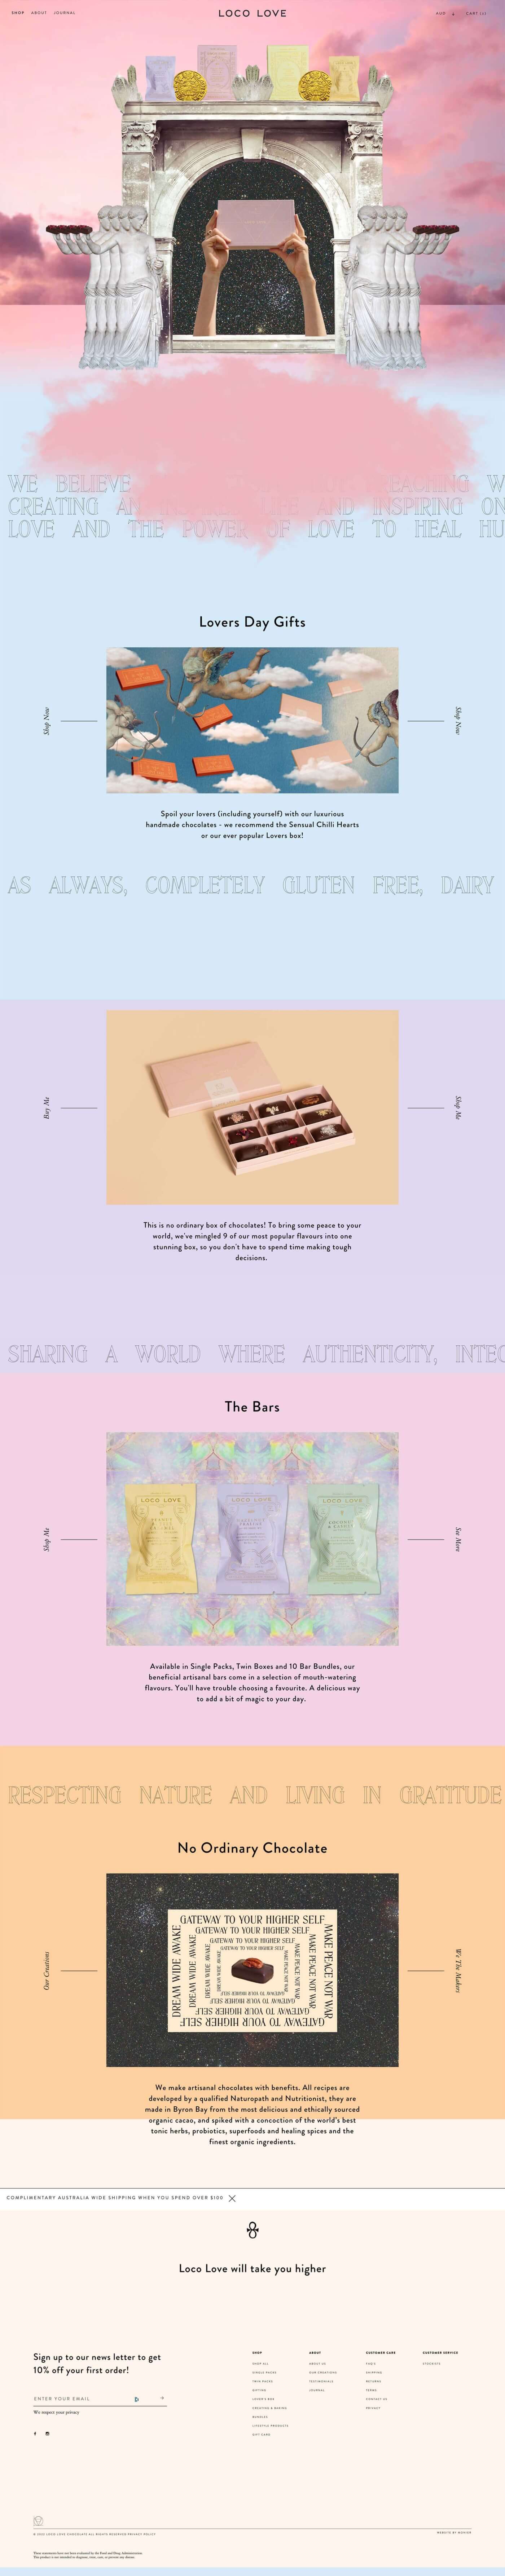 Shopify Website Design Inspiration - Loco Love